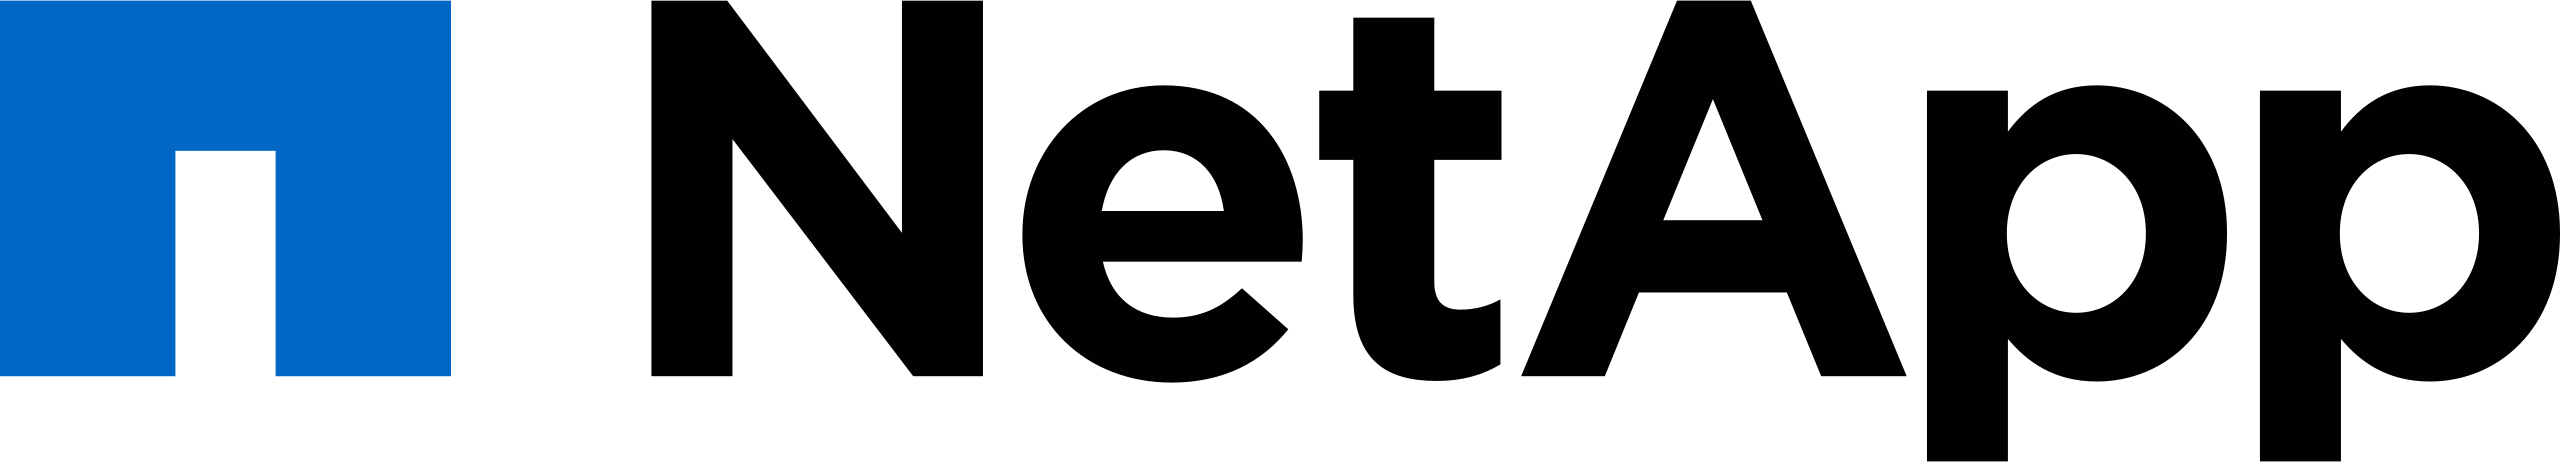 NetApp_logo_2020.svg